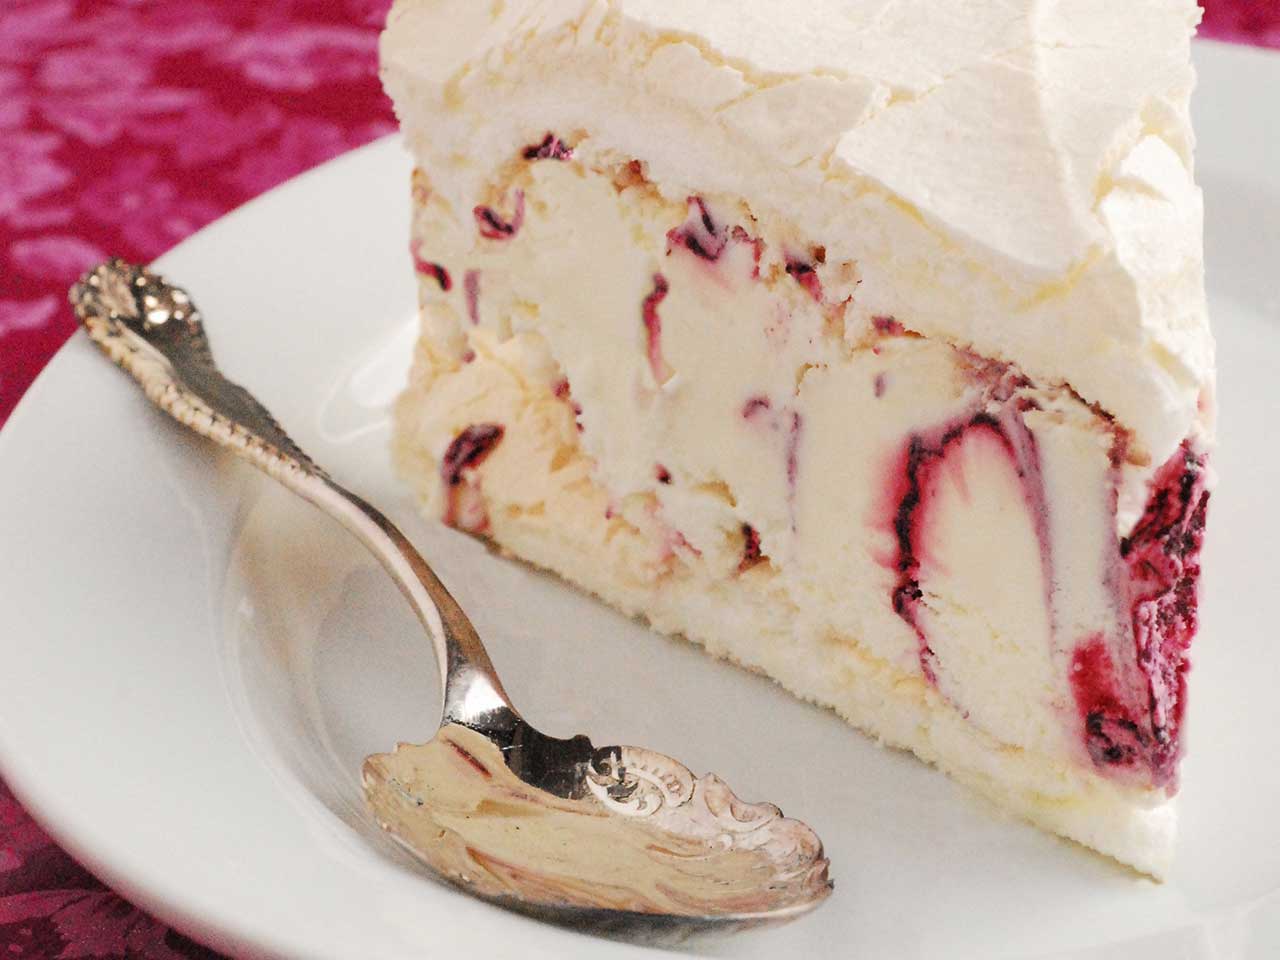 Boysenberry ice cream cake